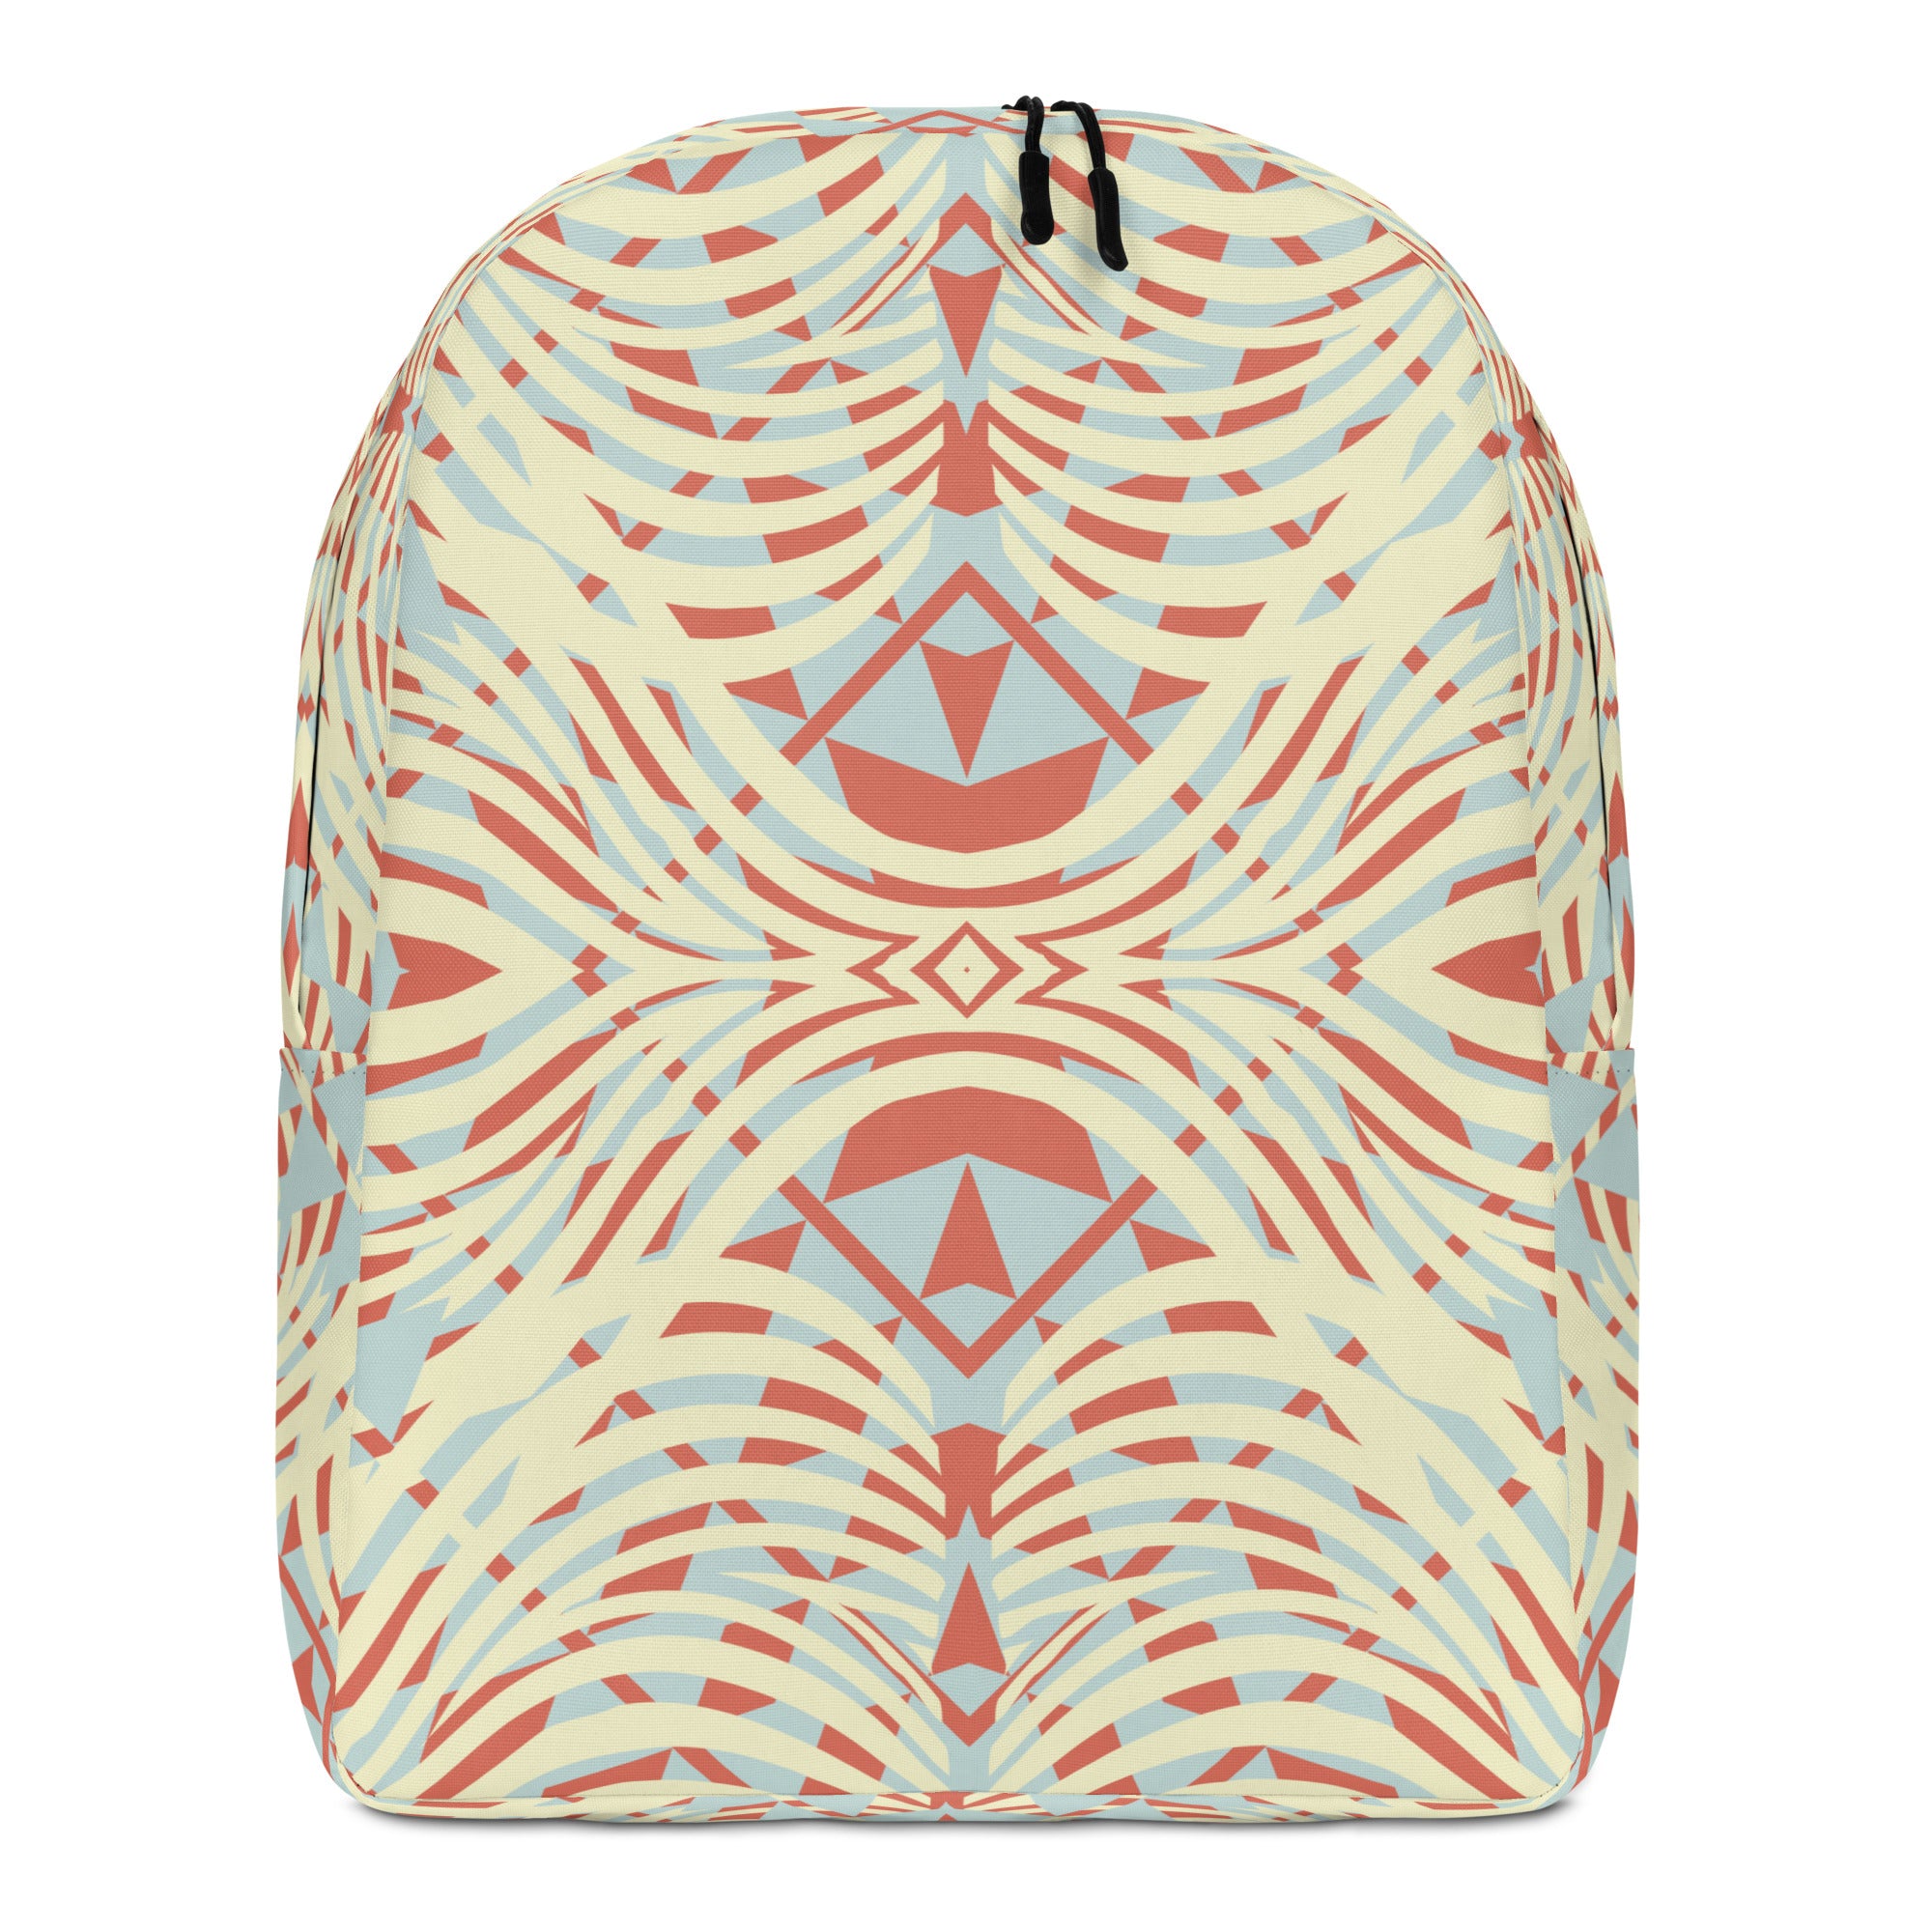 Minimalist Backpack- African Motif Pattern 03